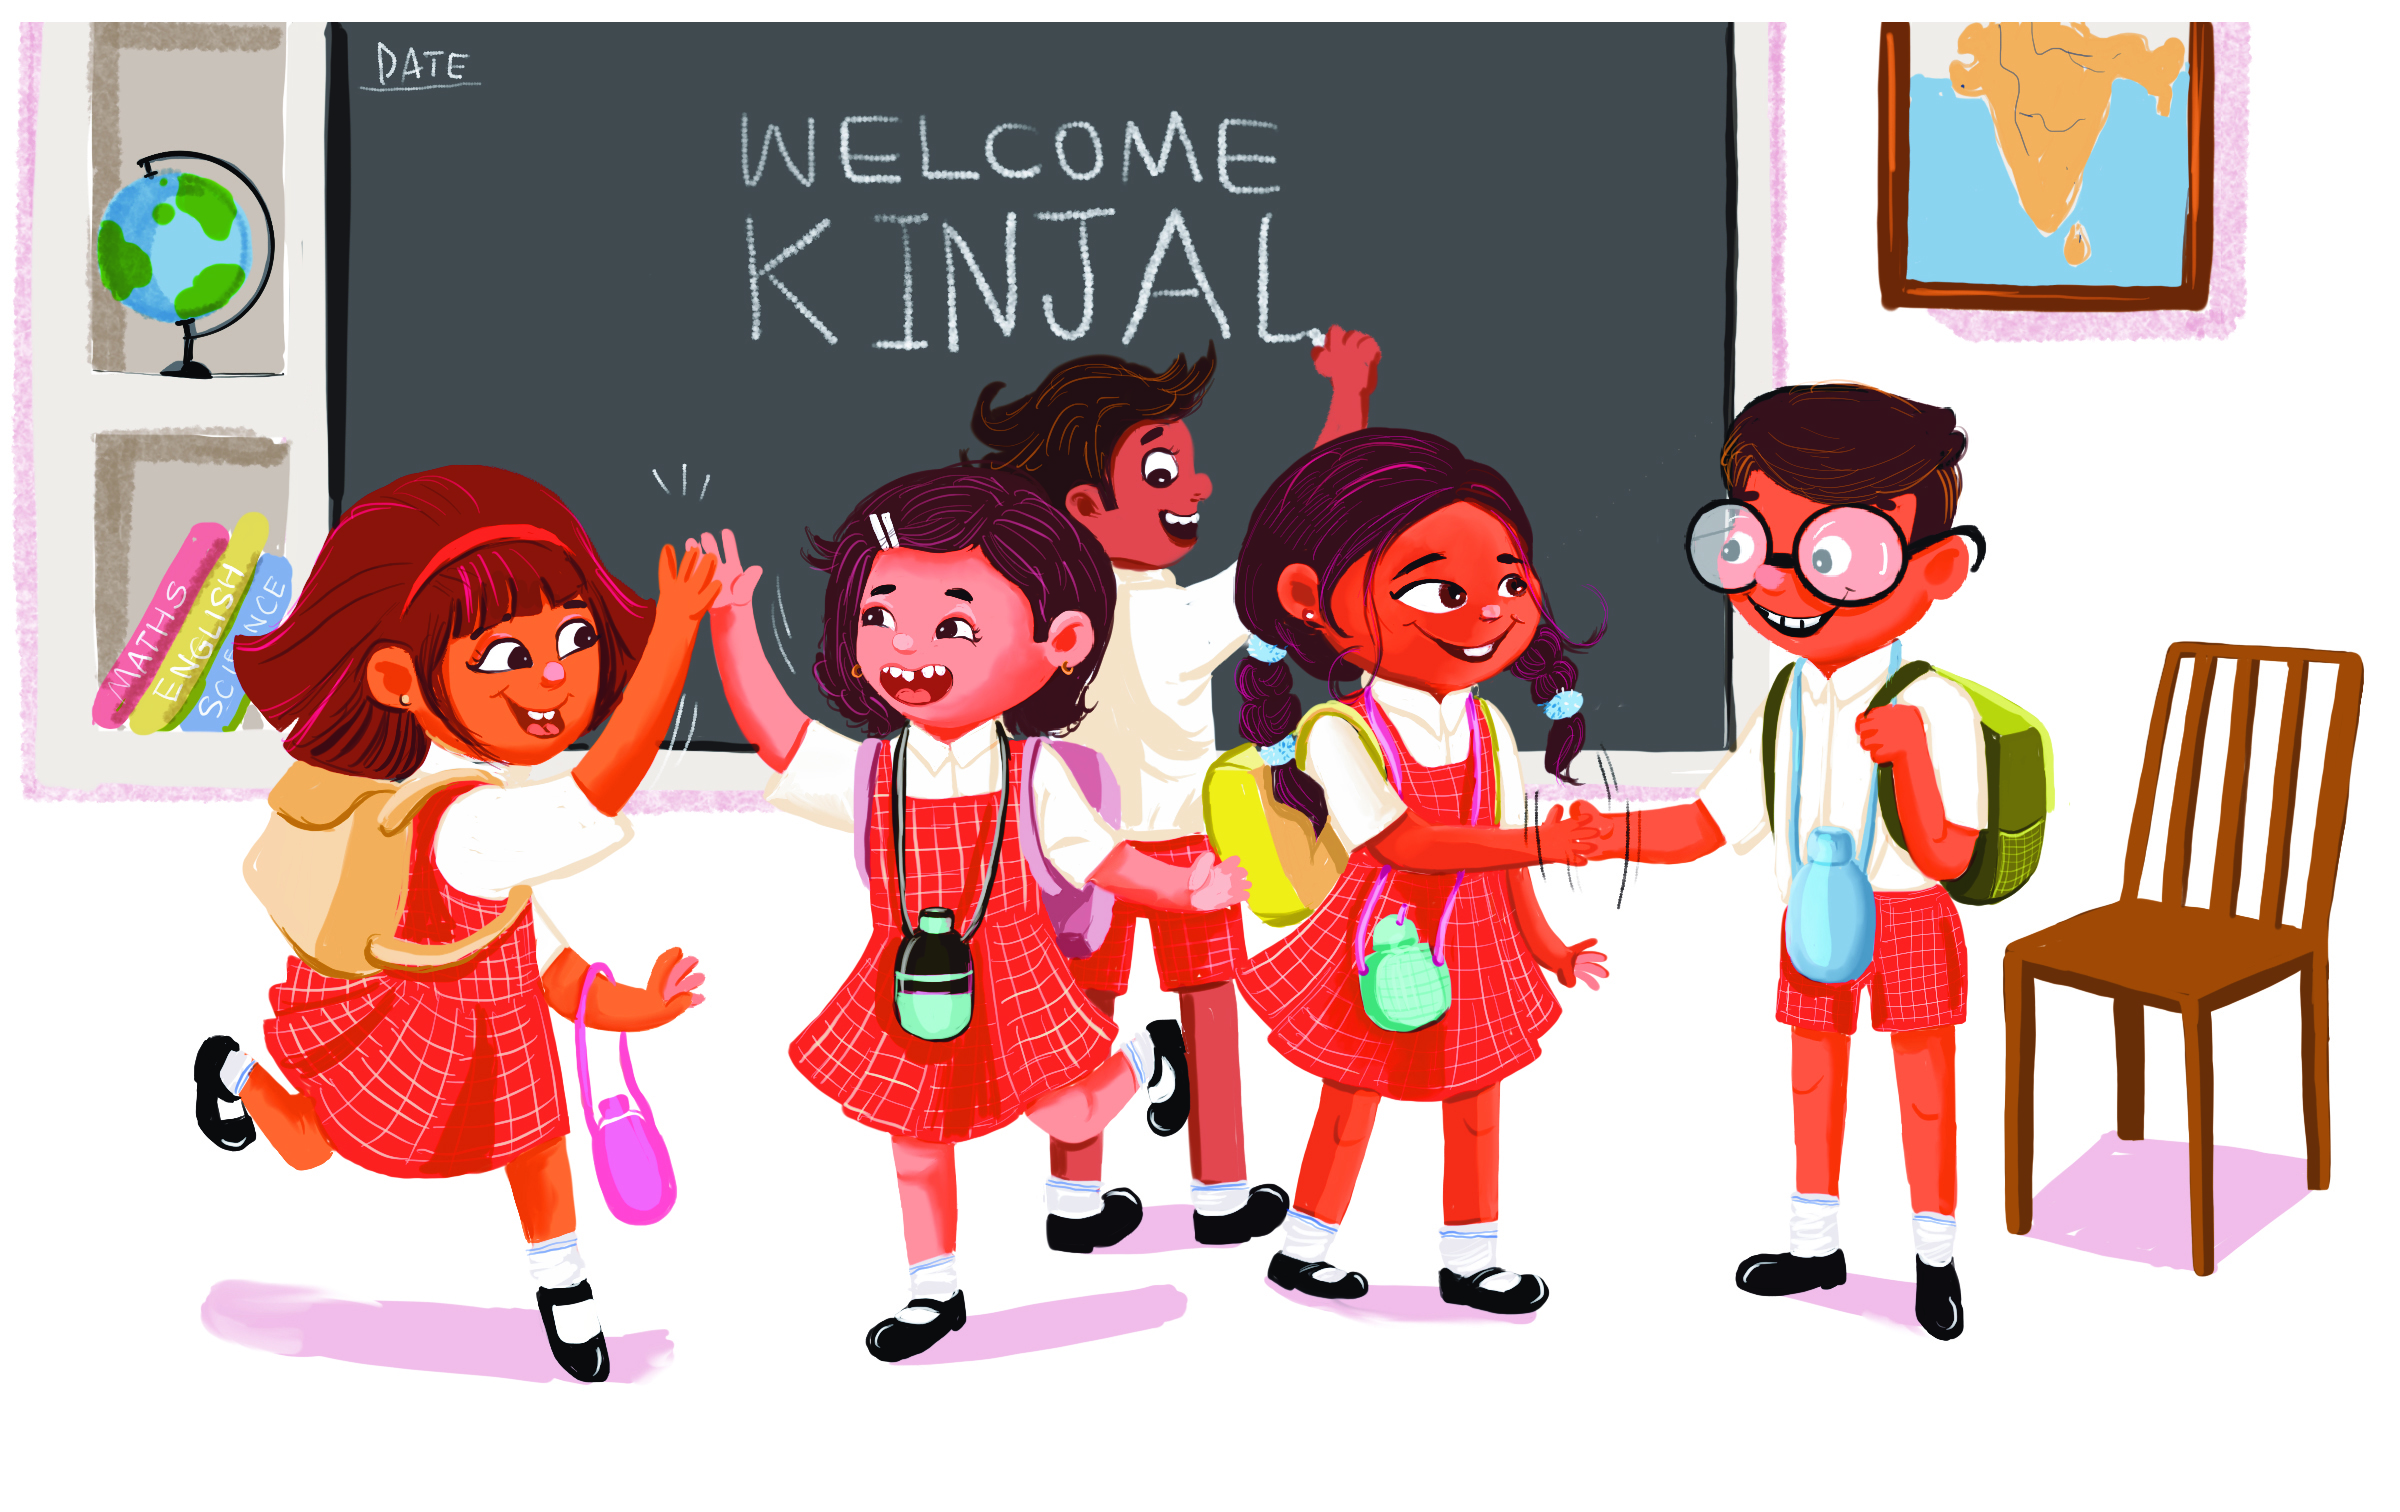 Kinjal’s New School